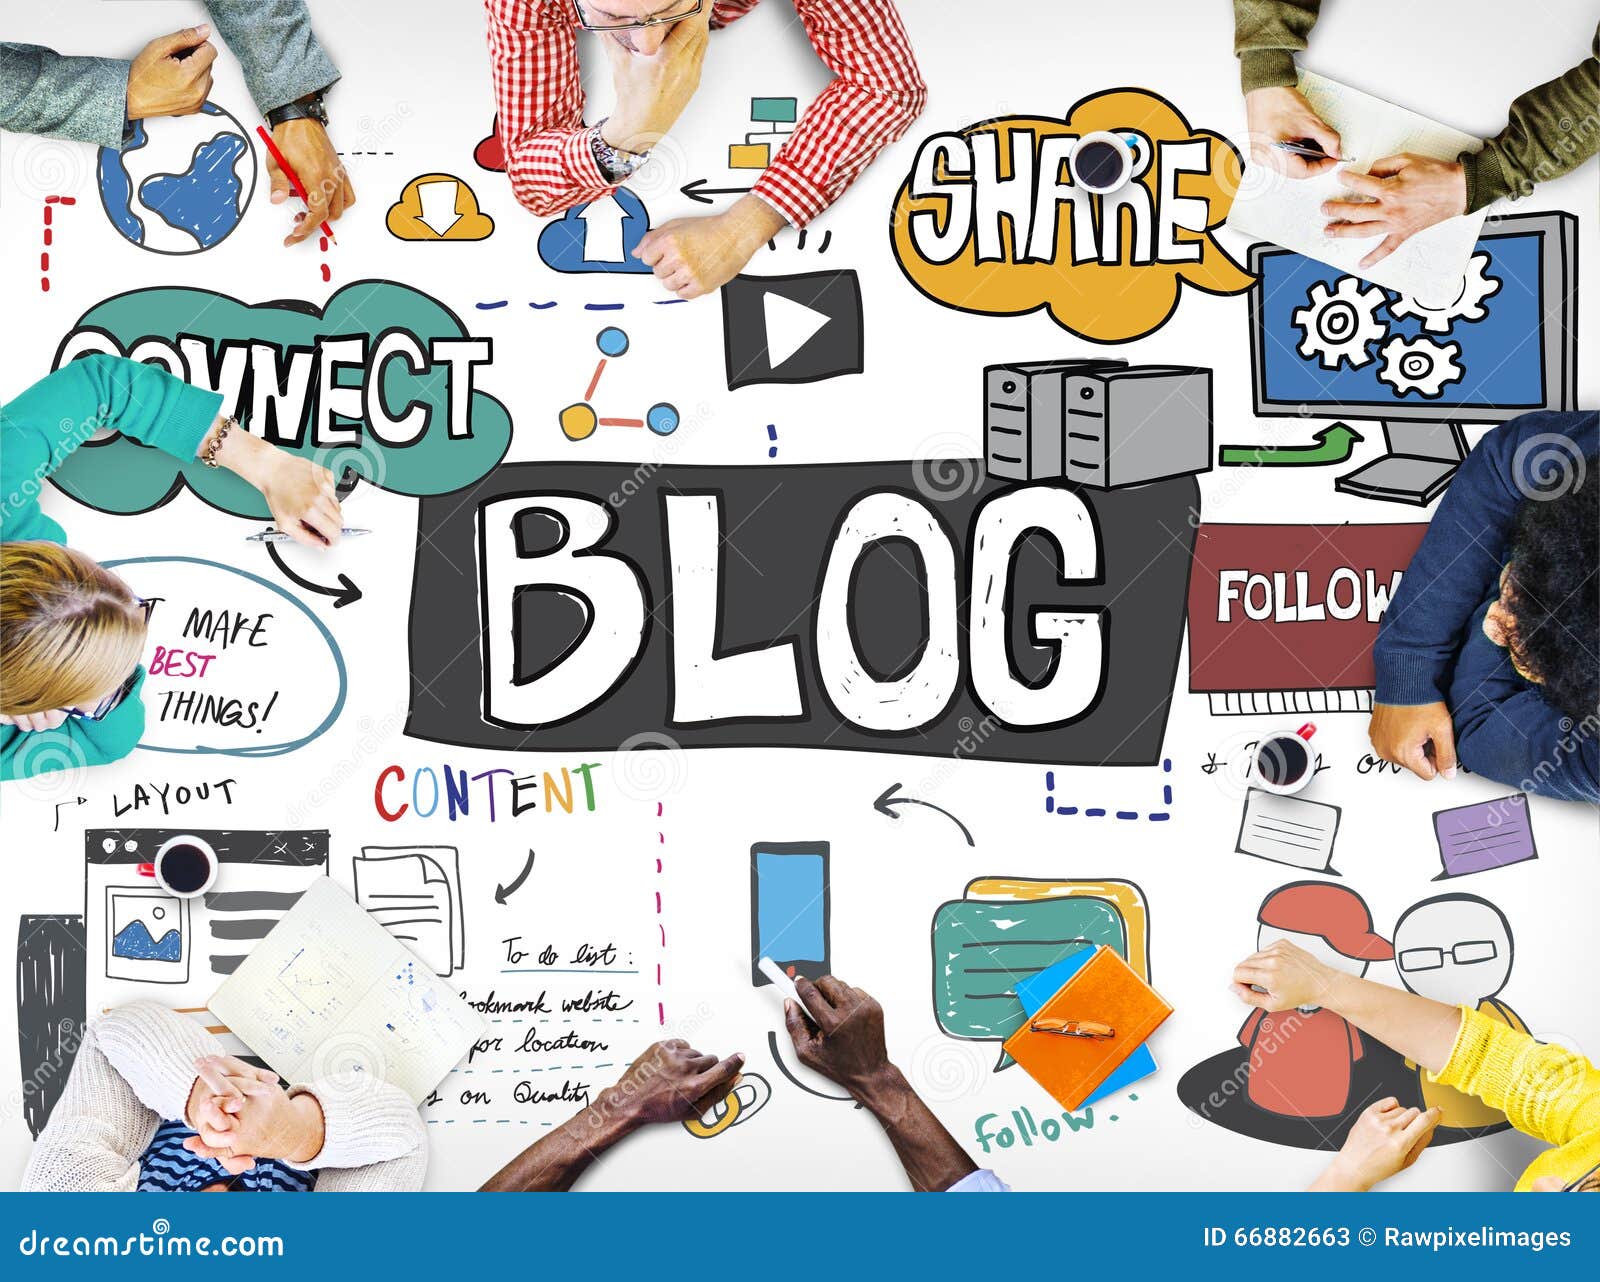 blog social media networking content blogging concept